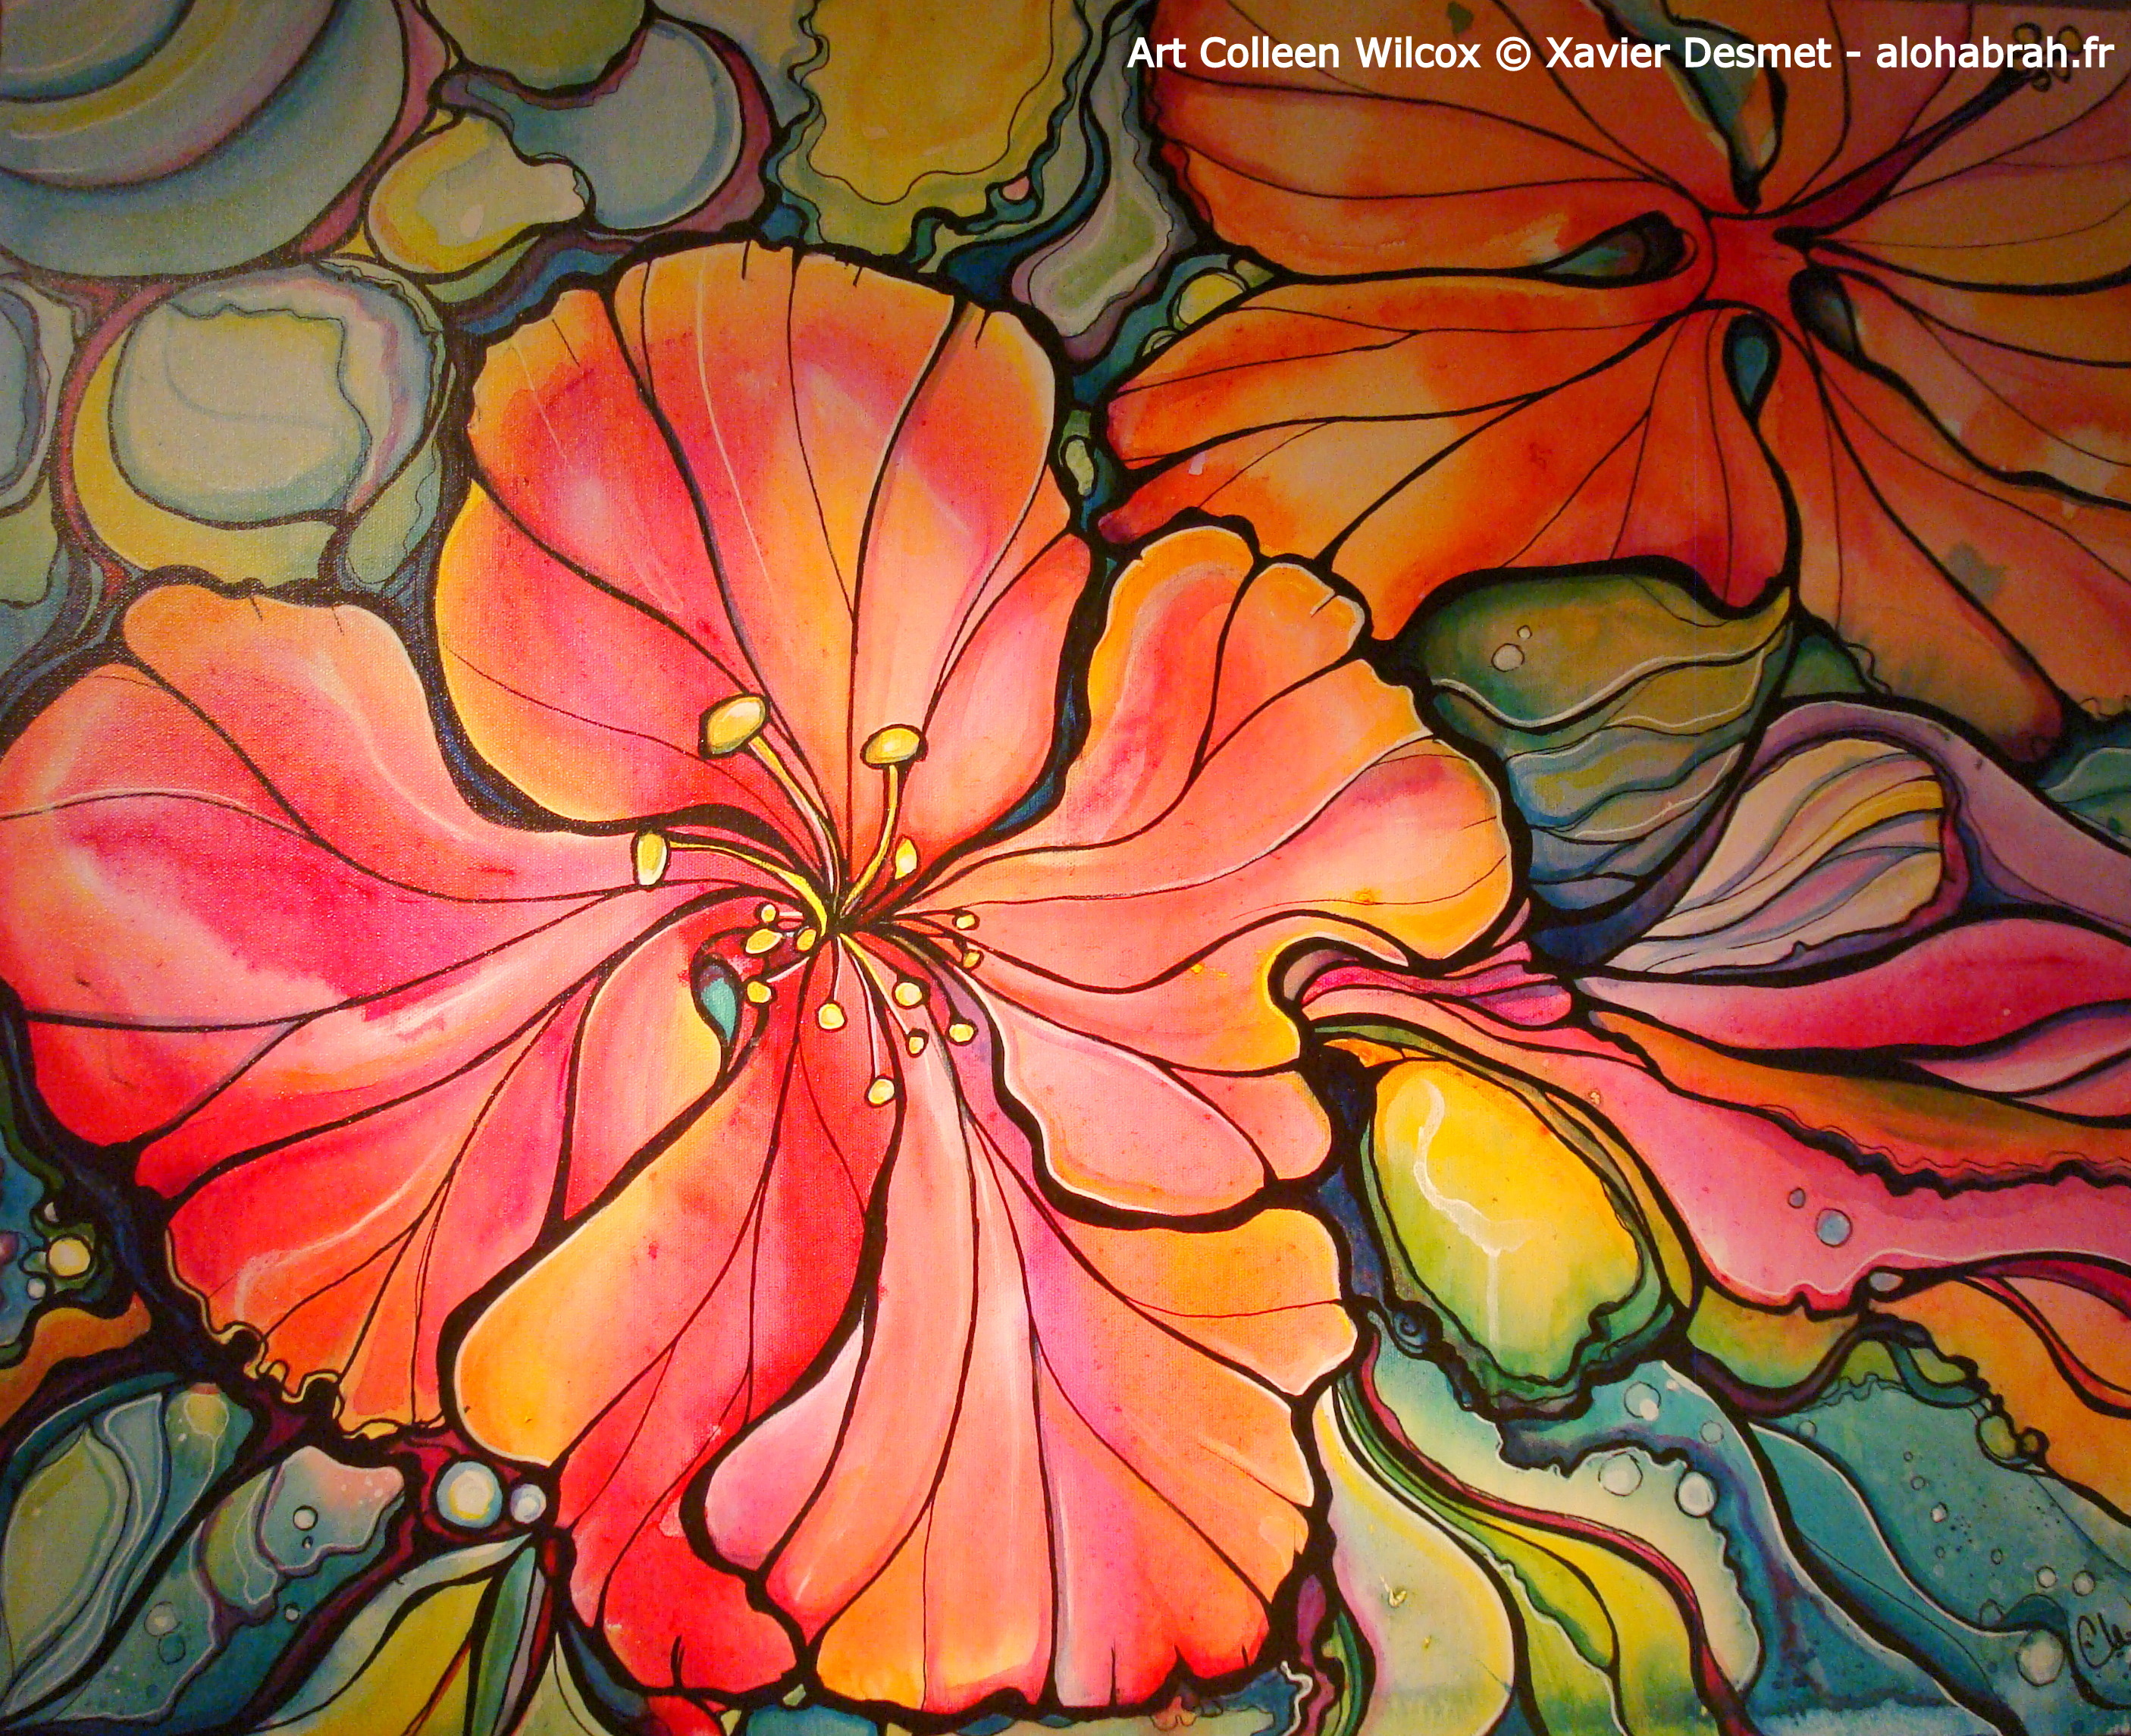 Hawaiian Flowers - Art Colleen Wilcox © Xavier Desmet - alohabrah.fr